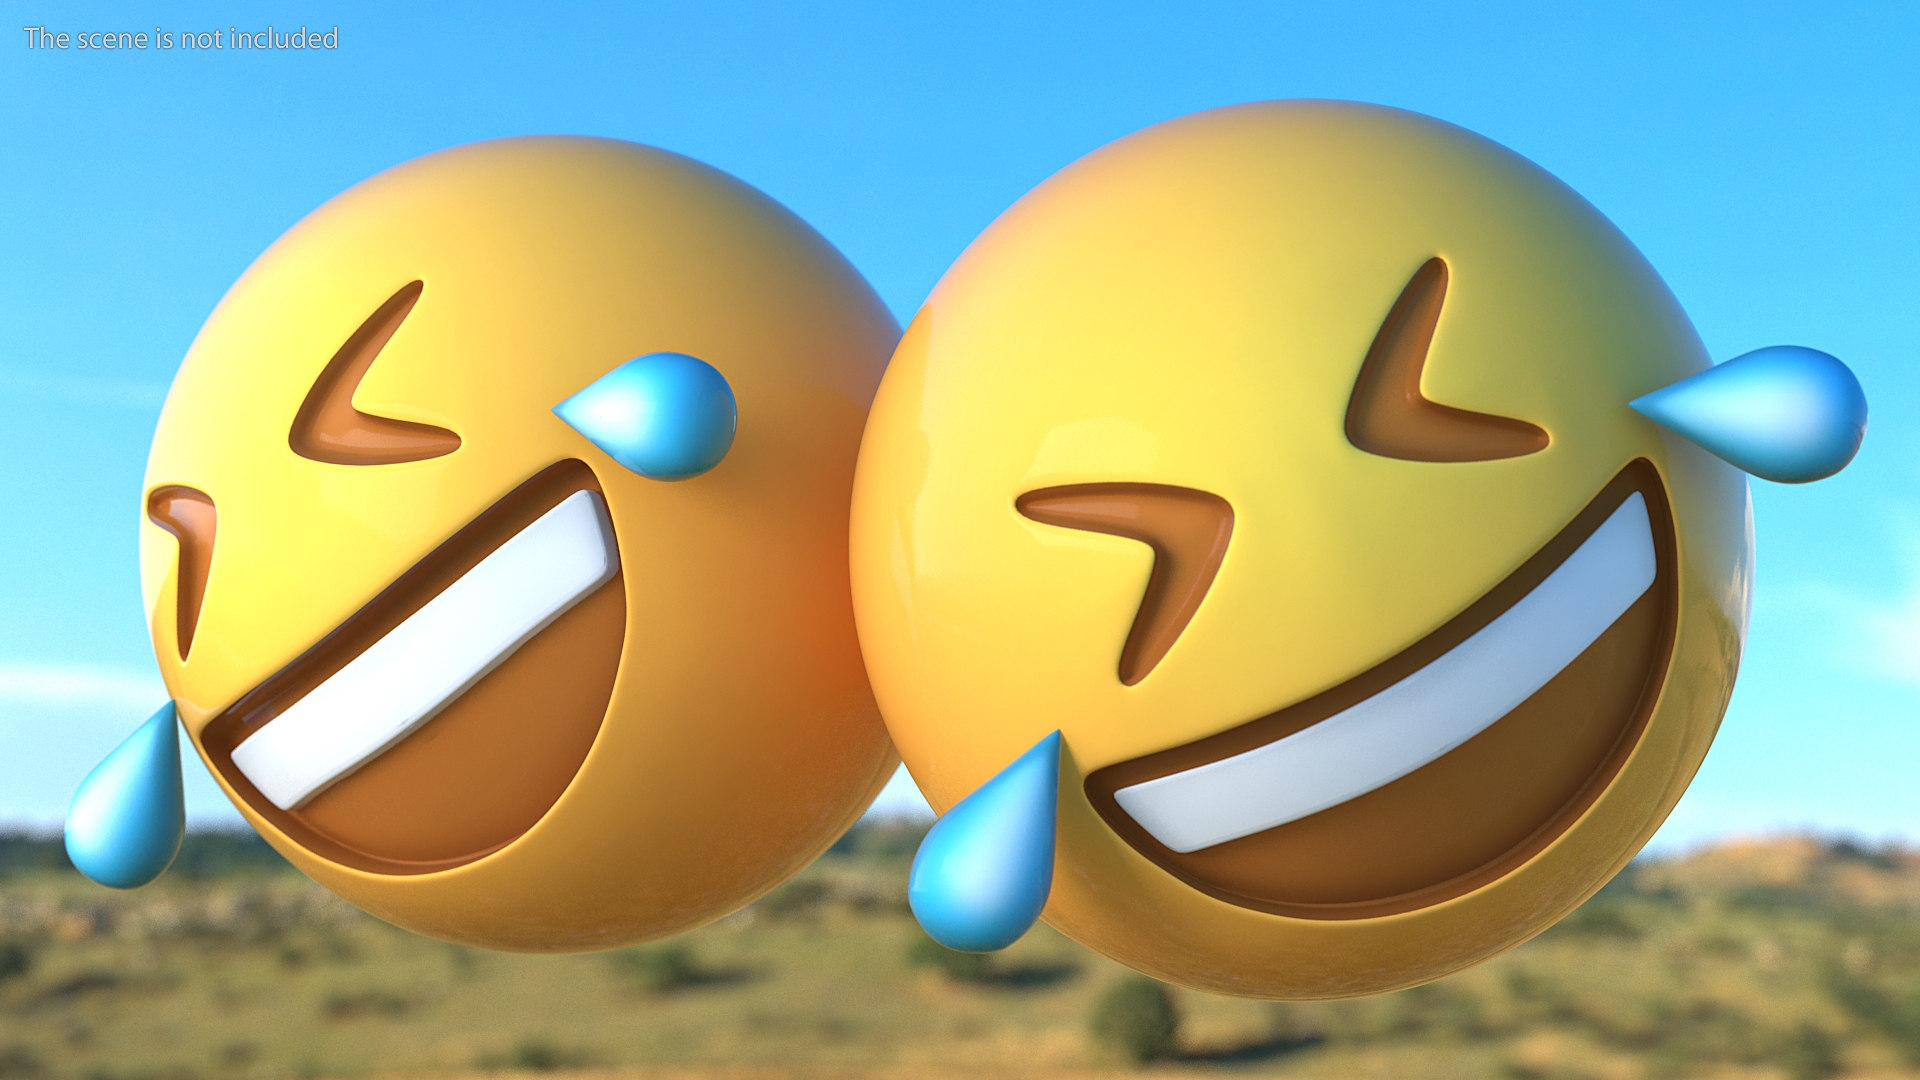 3D rolling floor laughing emoji model - TurboSquid 1533412